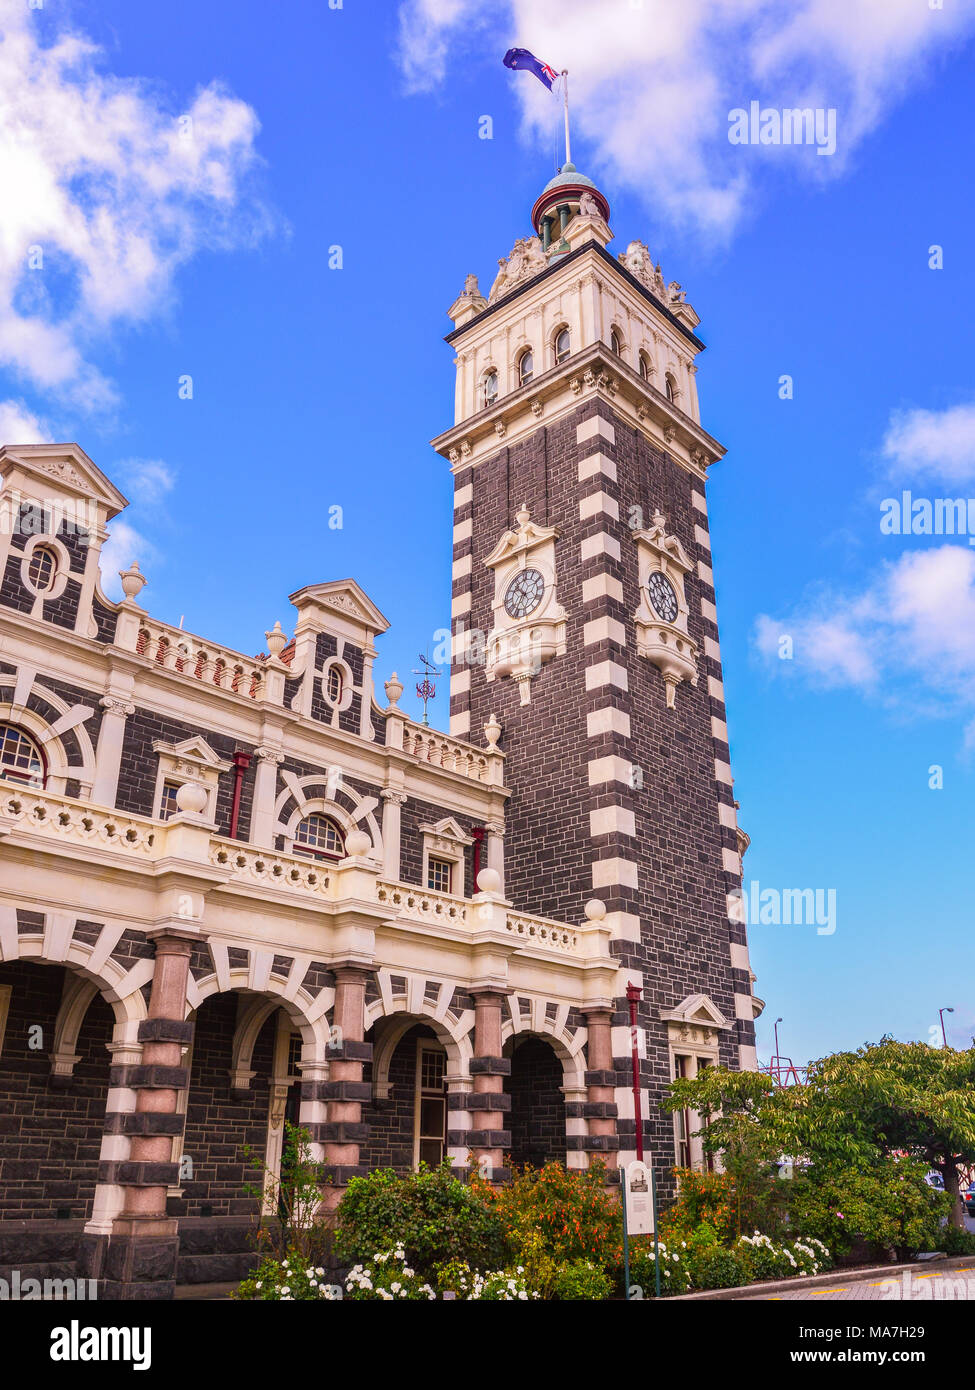 Clock Tower of Dunedin Railway Station - Dunedin, New Zealand Stock Photo